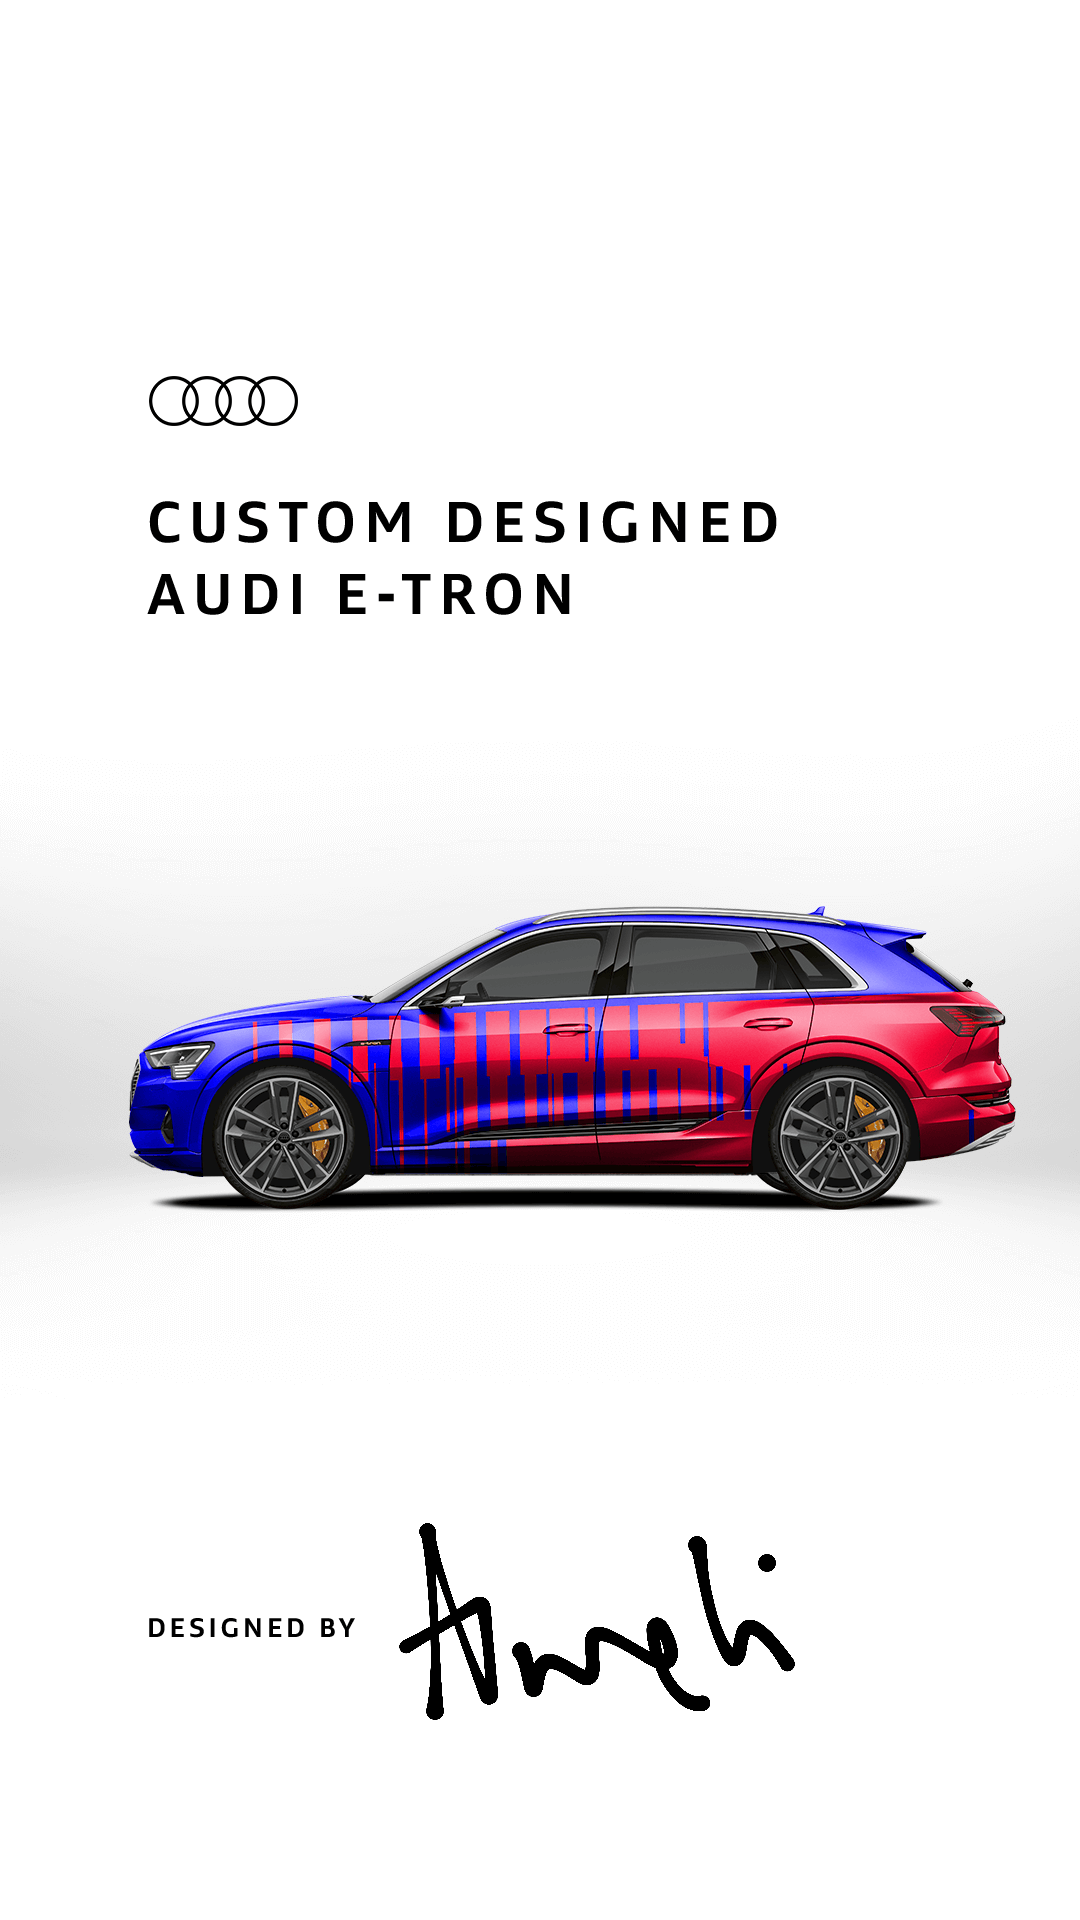 #custometron, Custom Audi e-tron social Campaign, Designed by Philipp Mandler